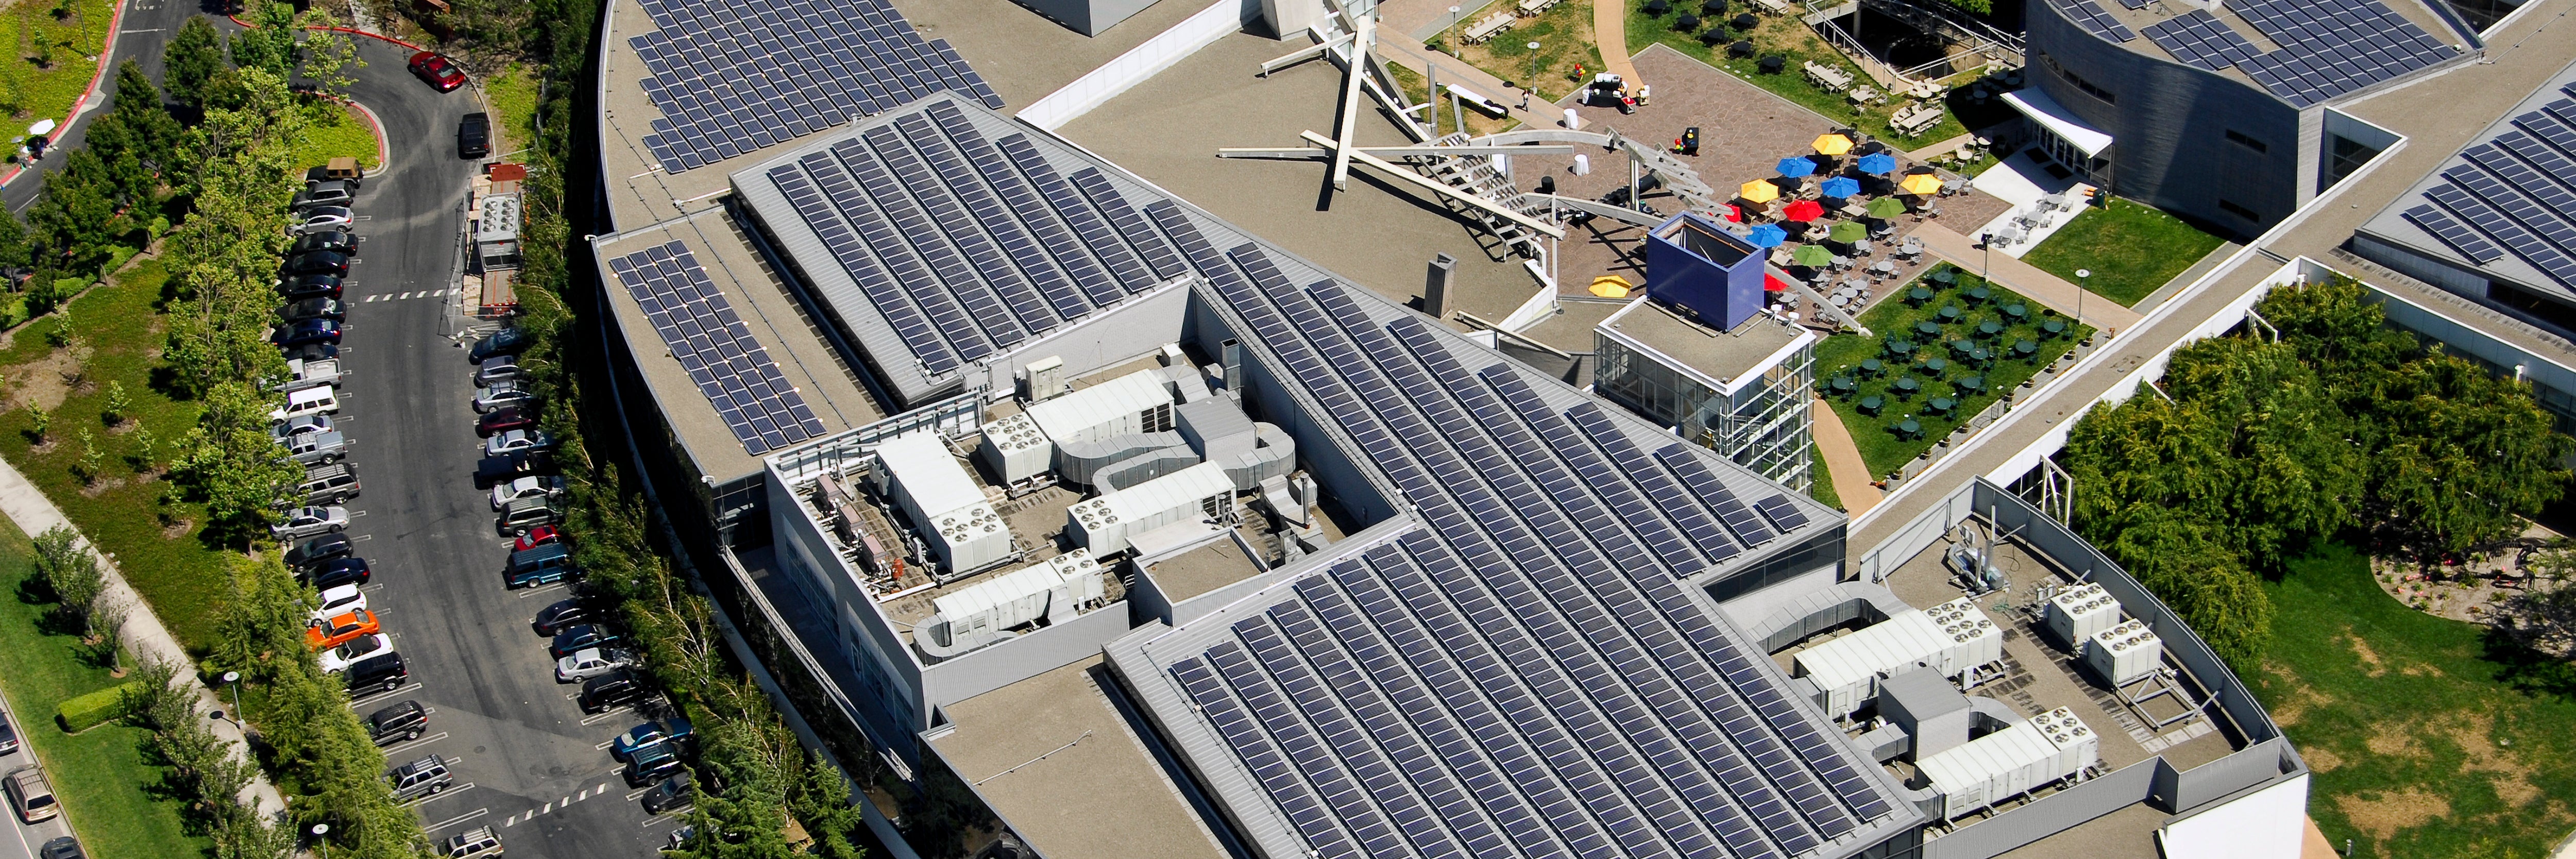 Solar panels on professional building